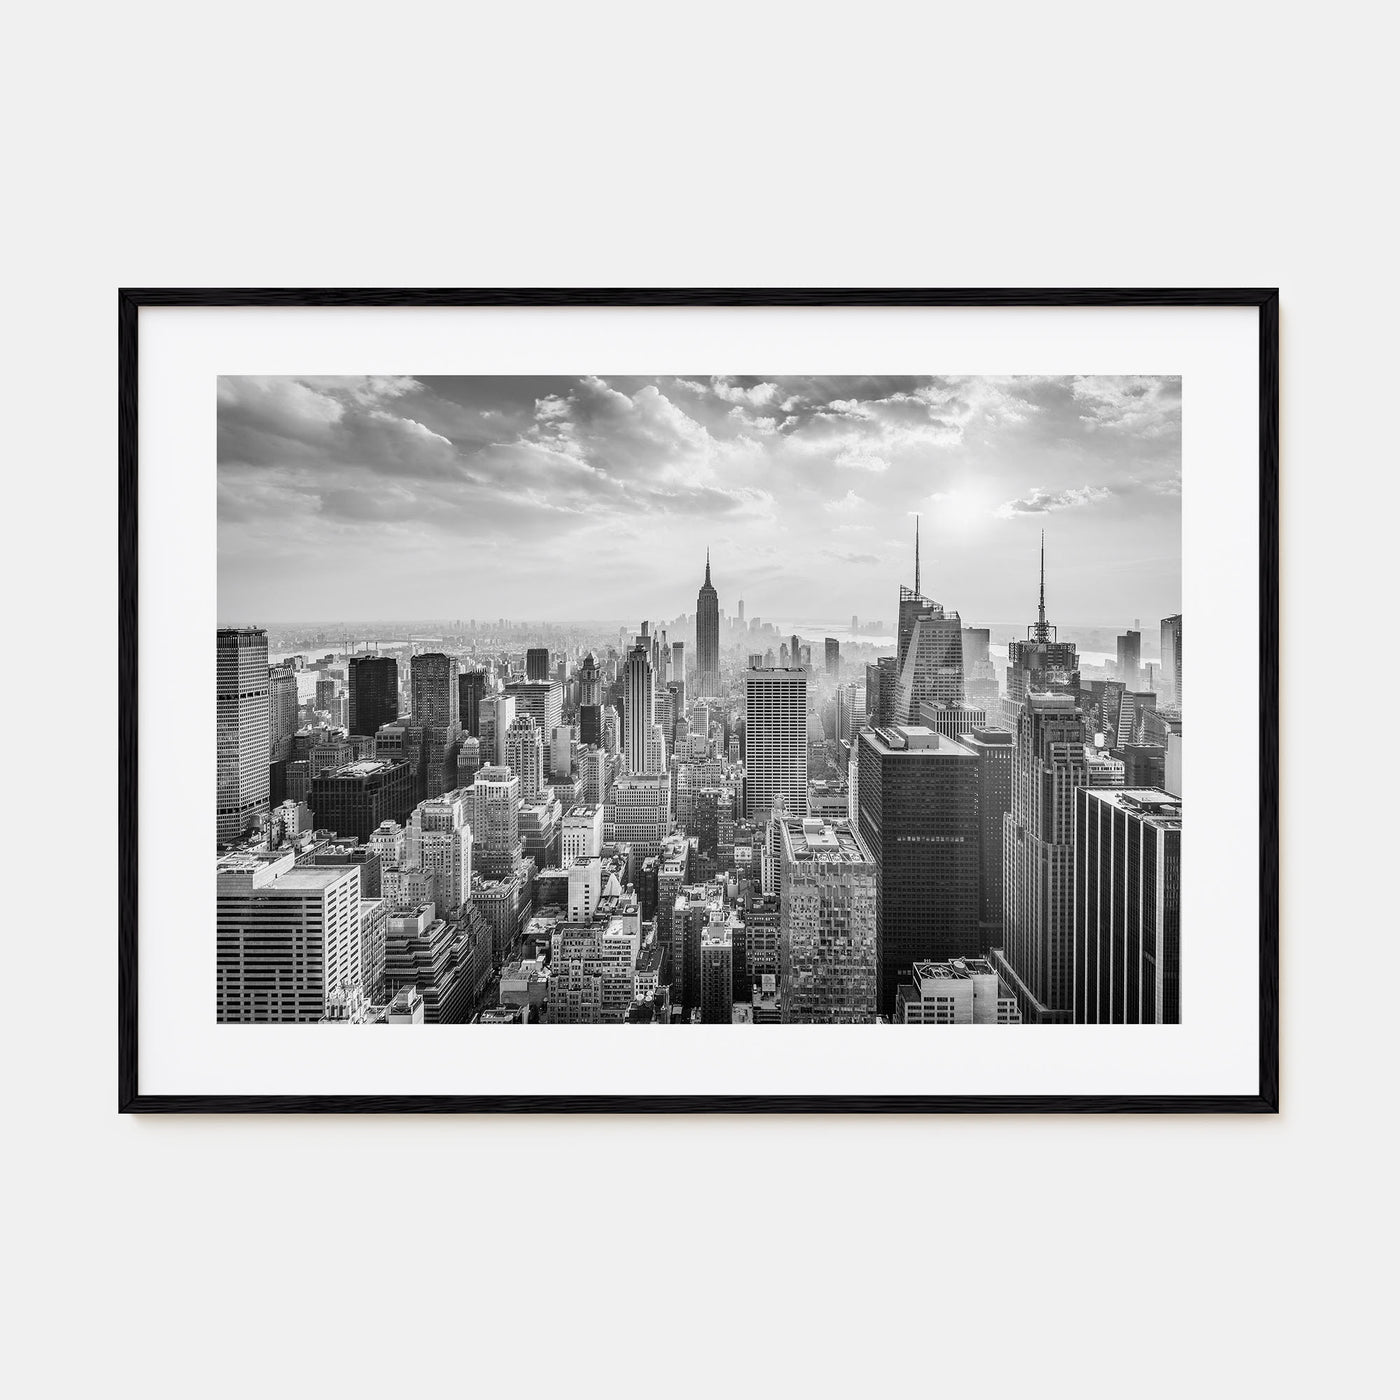 New York City Landscape B&W No 1 Poster